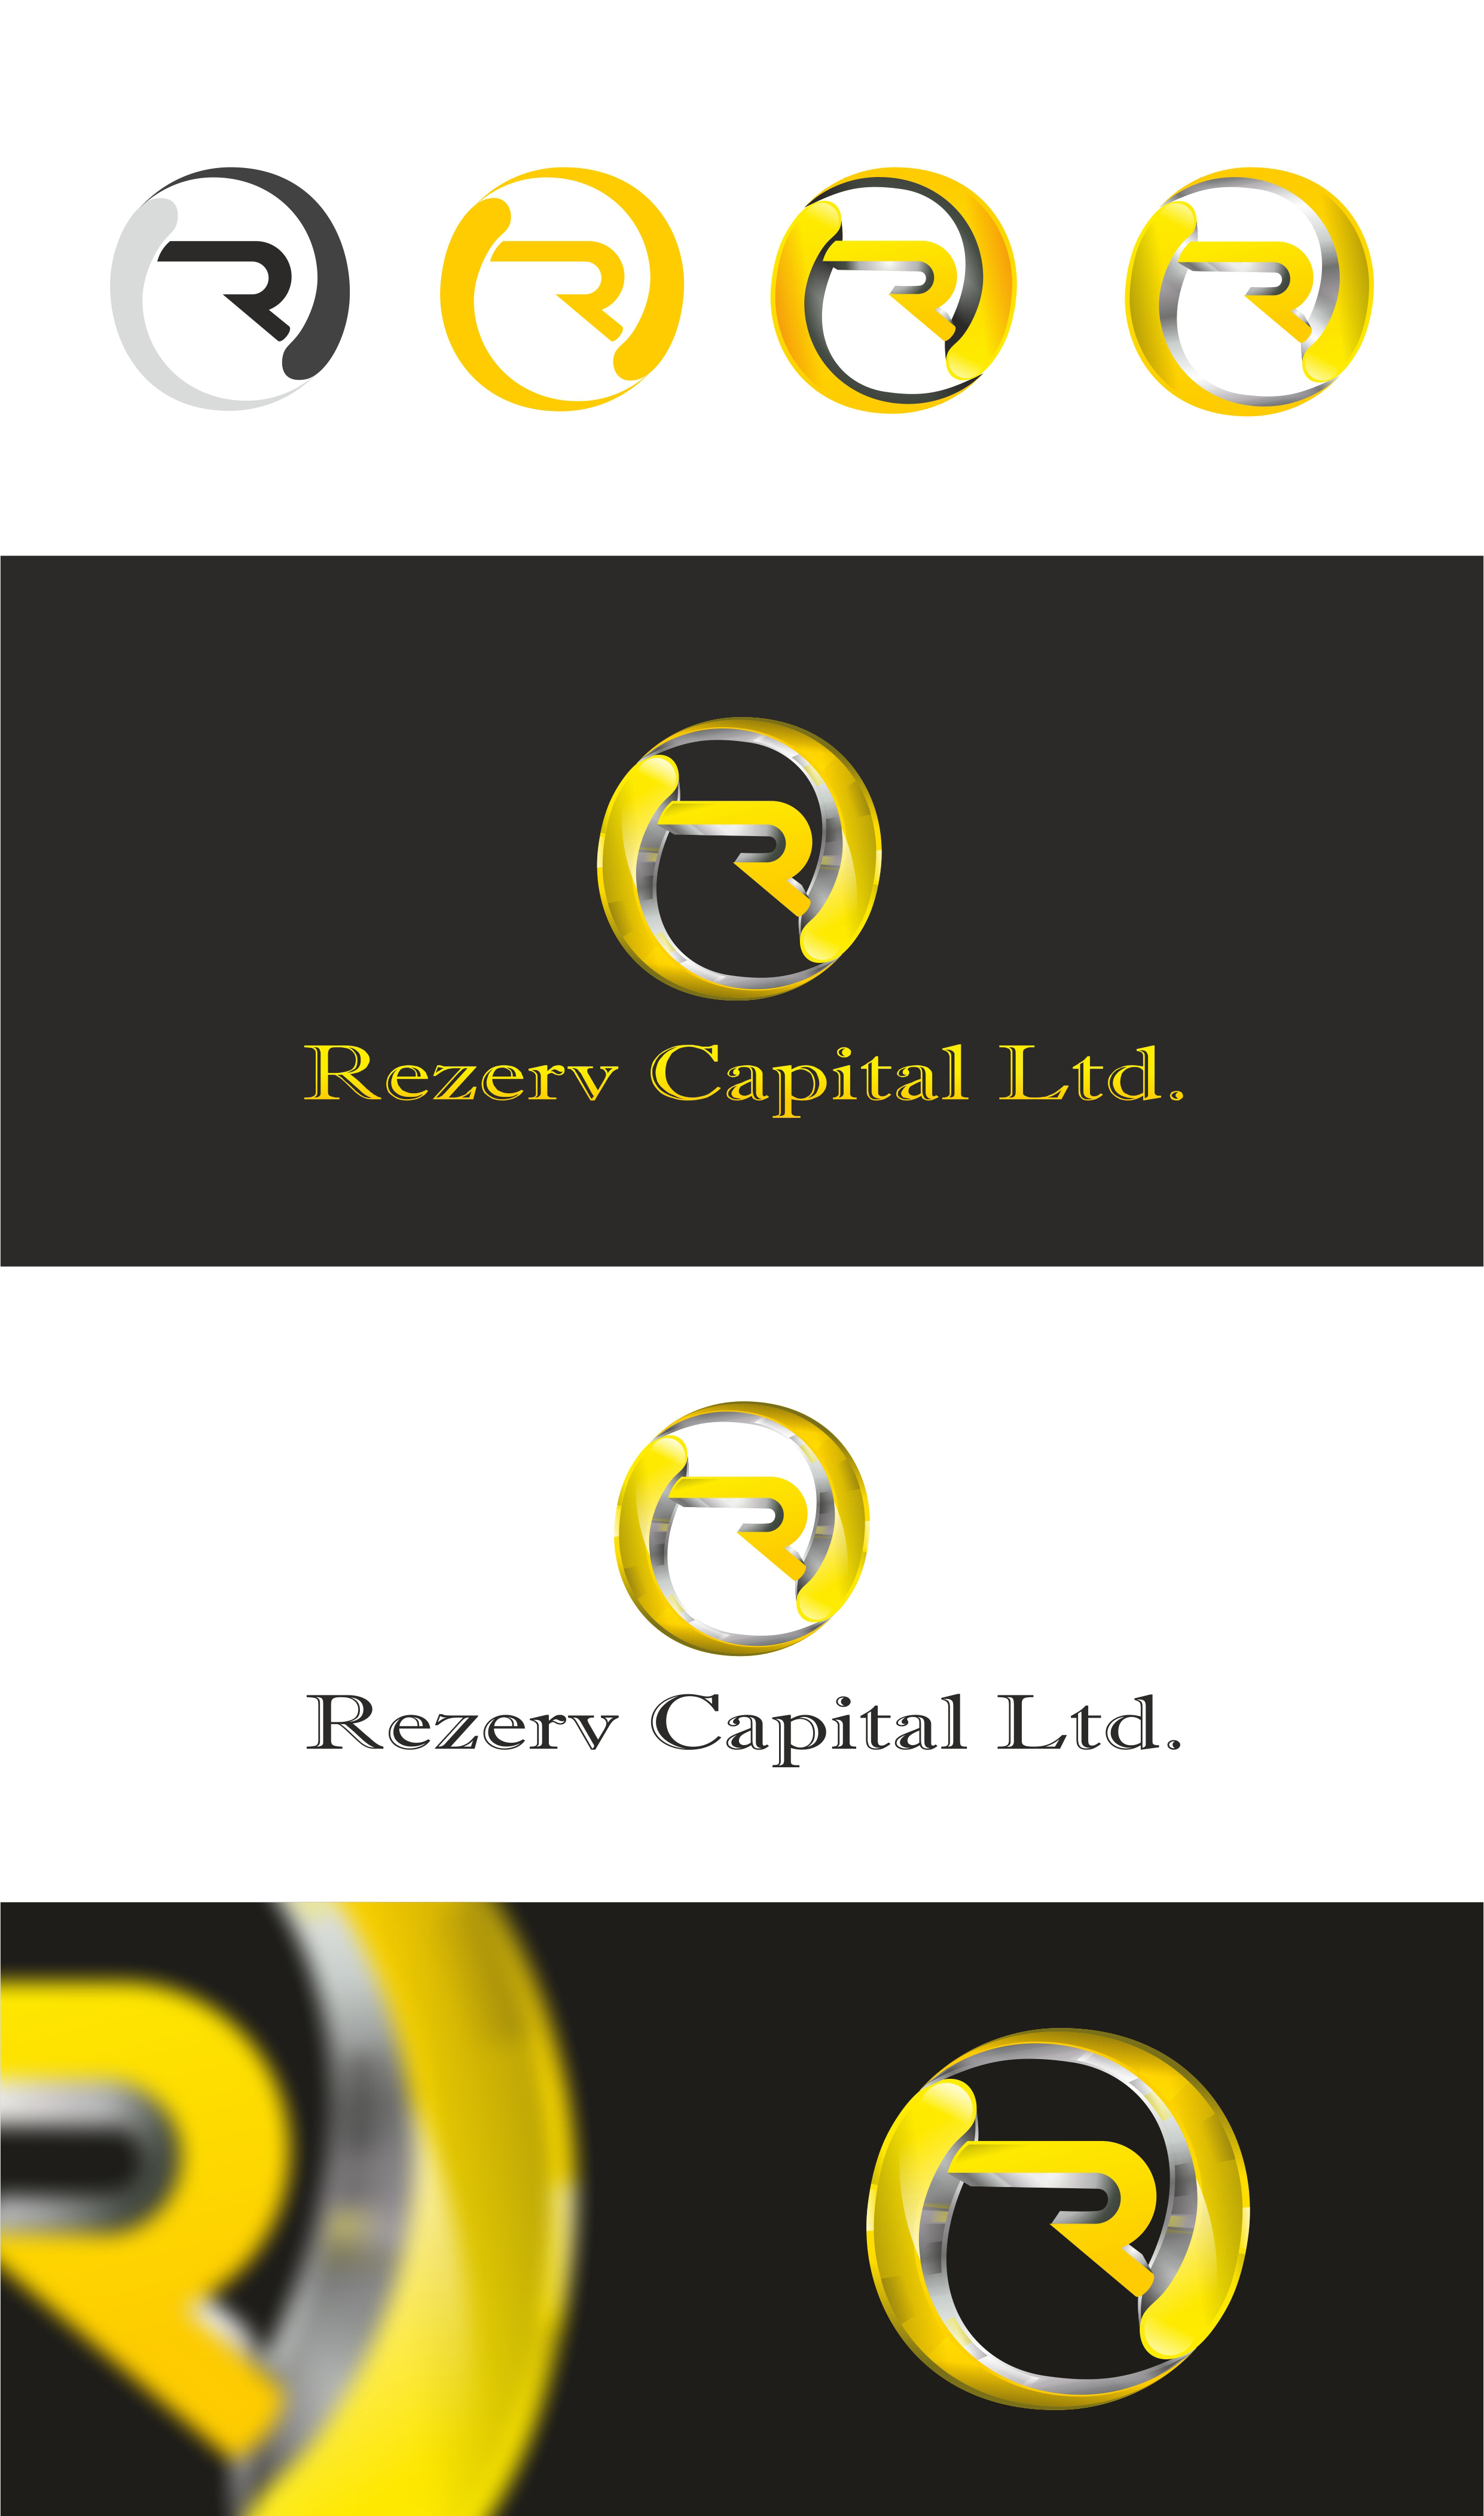 Rezerv Capital Ltd